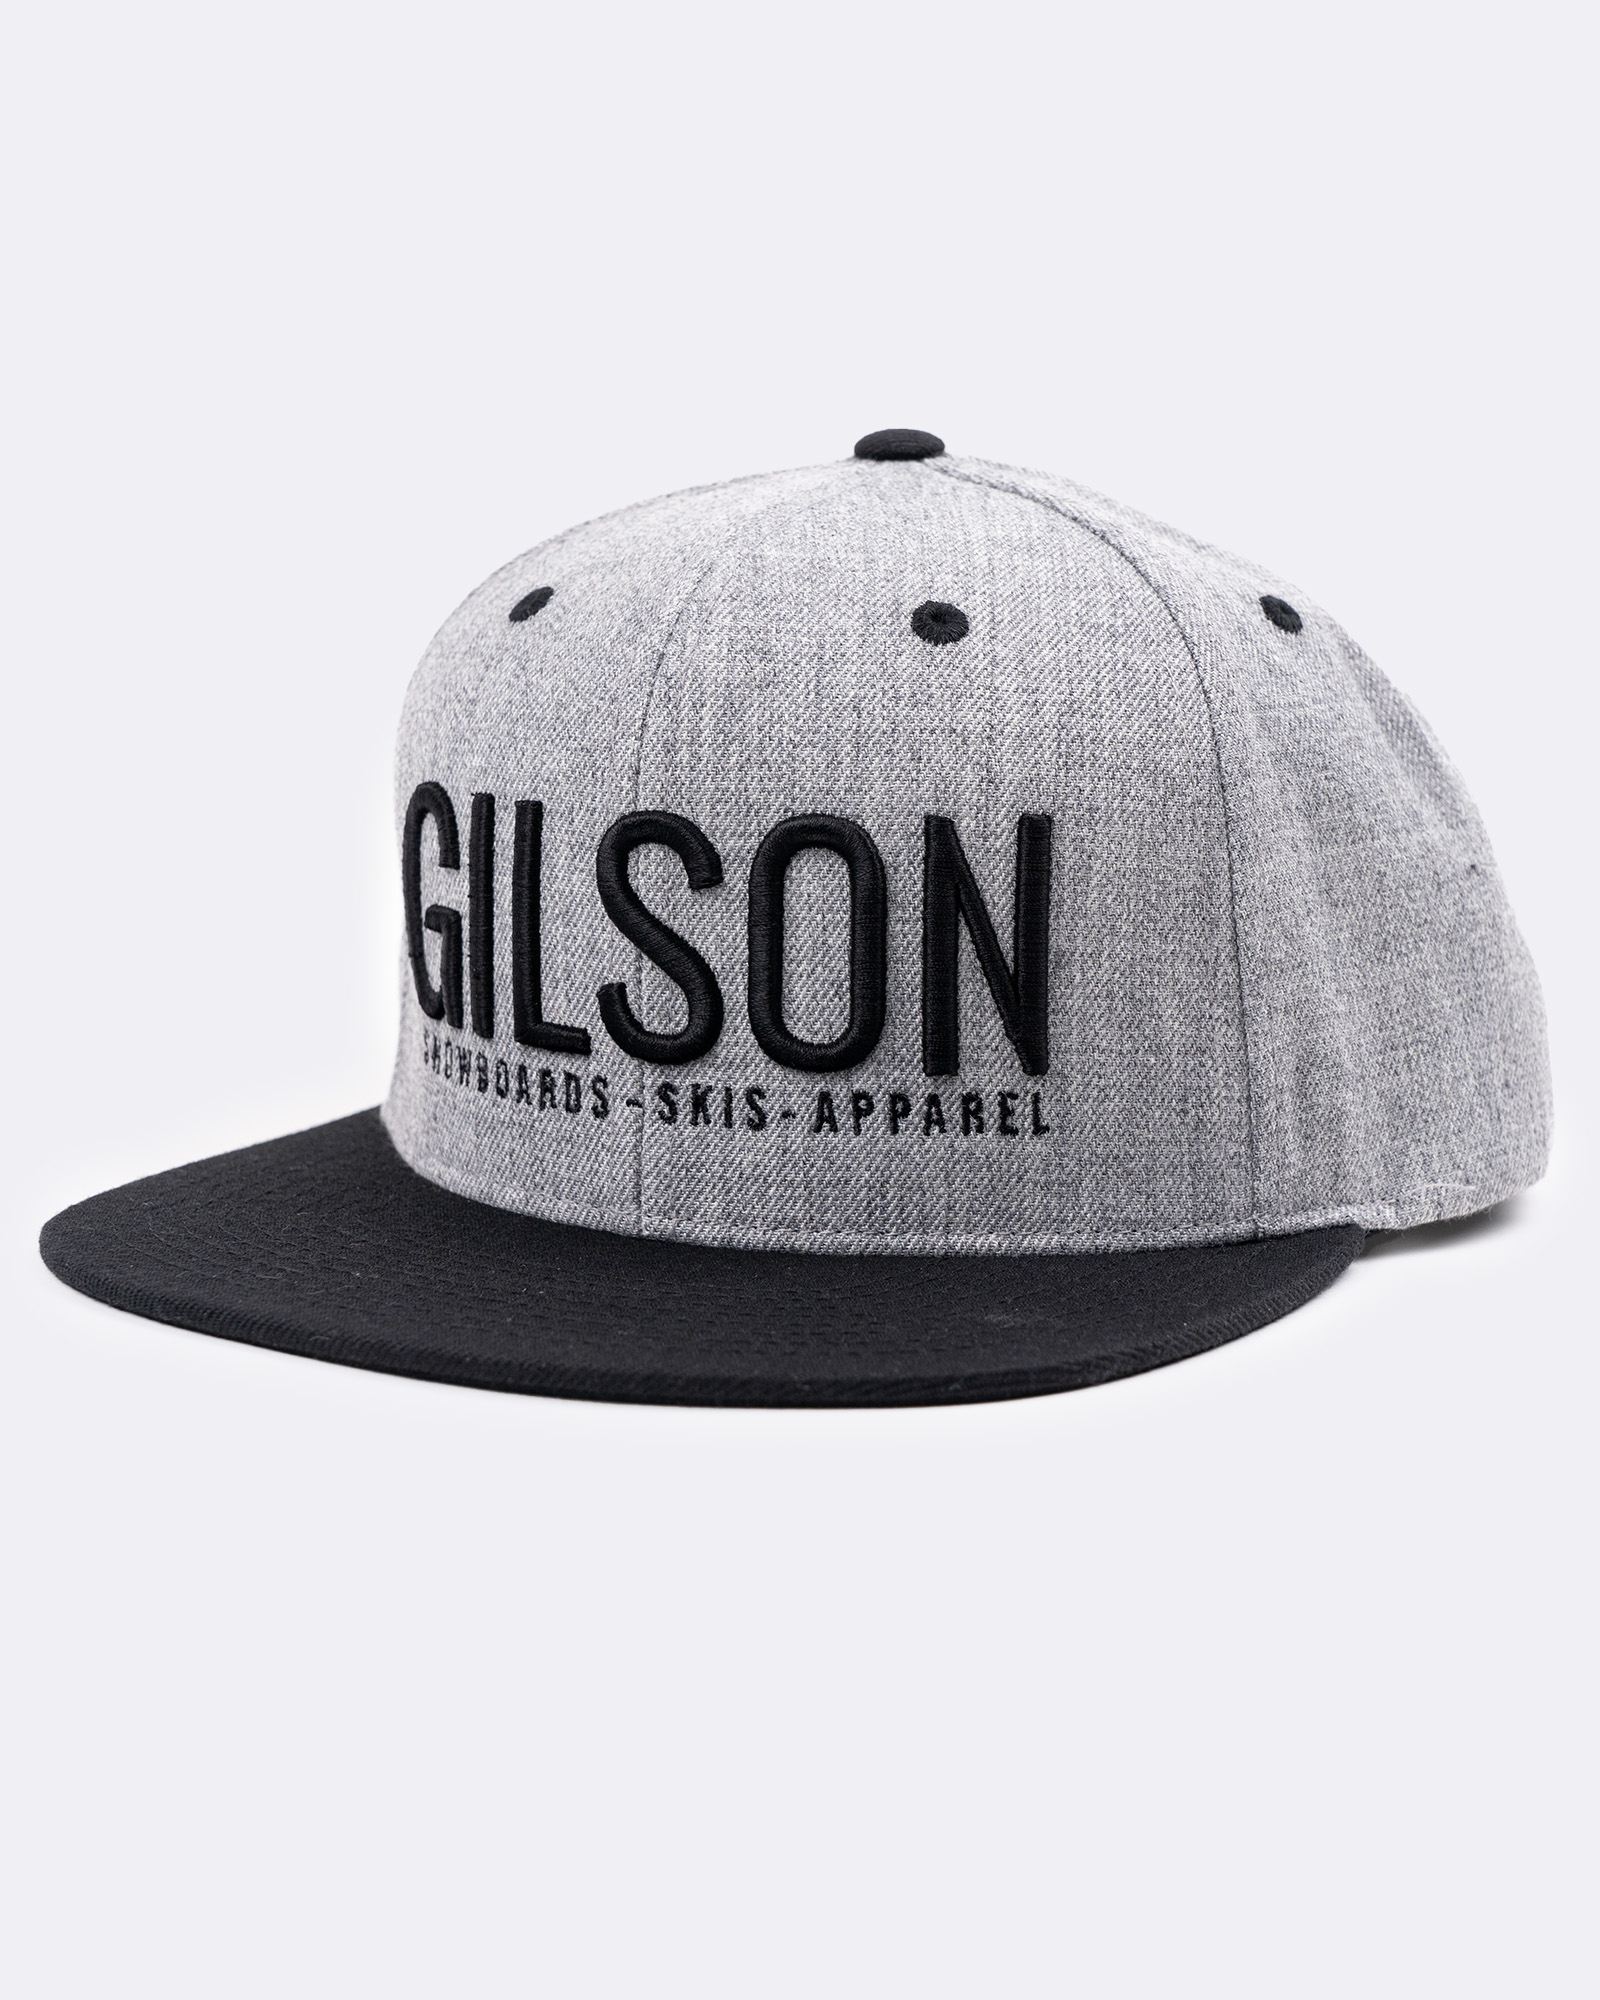 Gilson Flat Brim 
Snapback Gray Black graphics